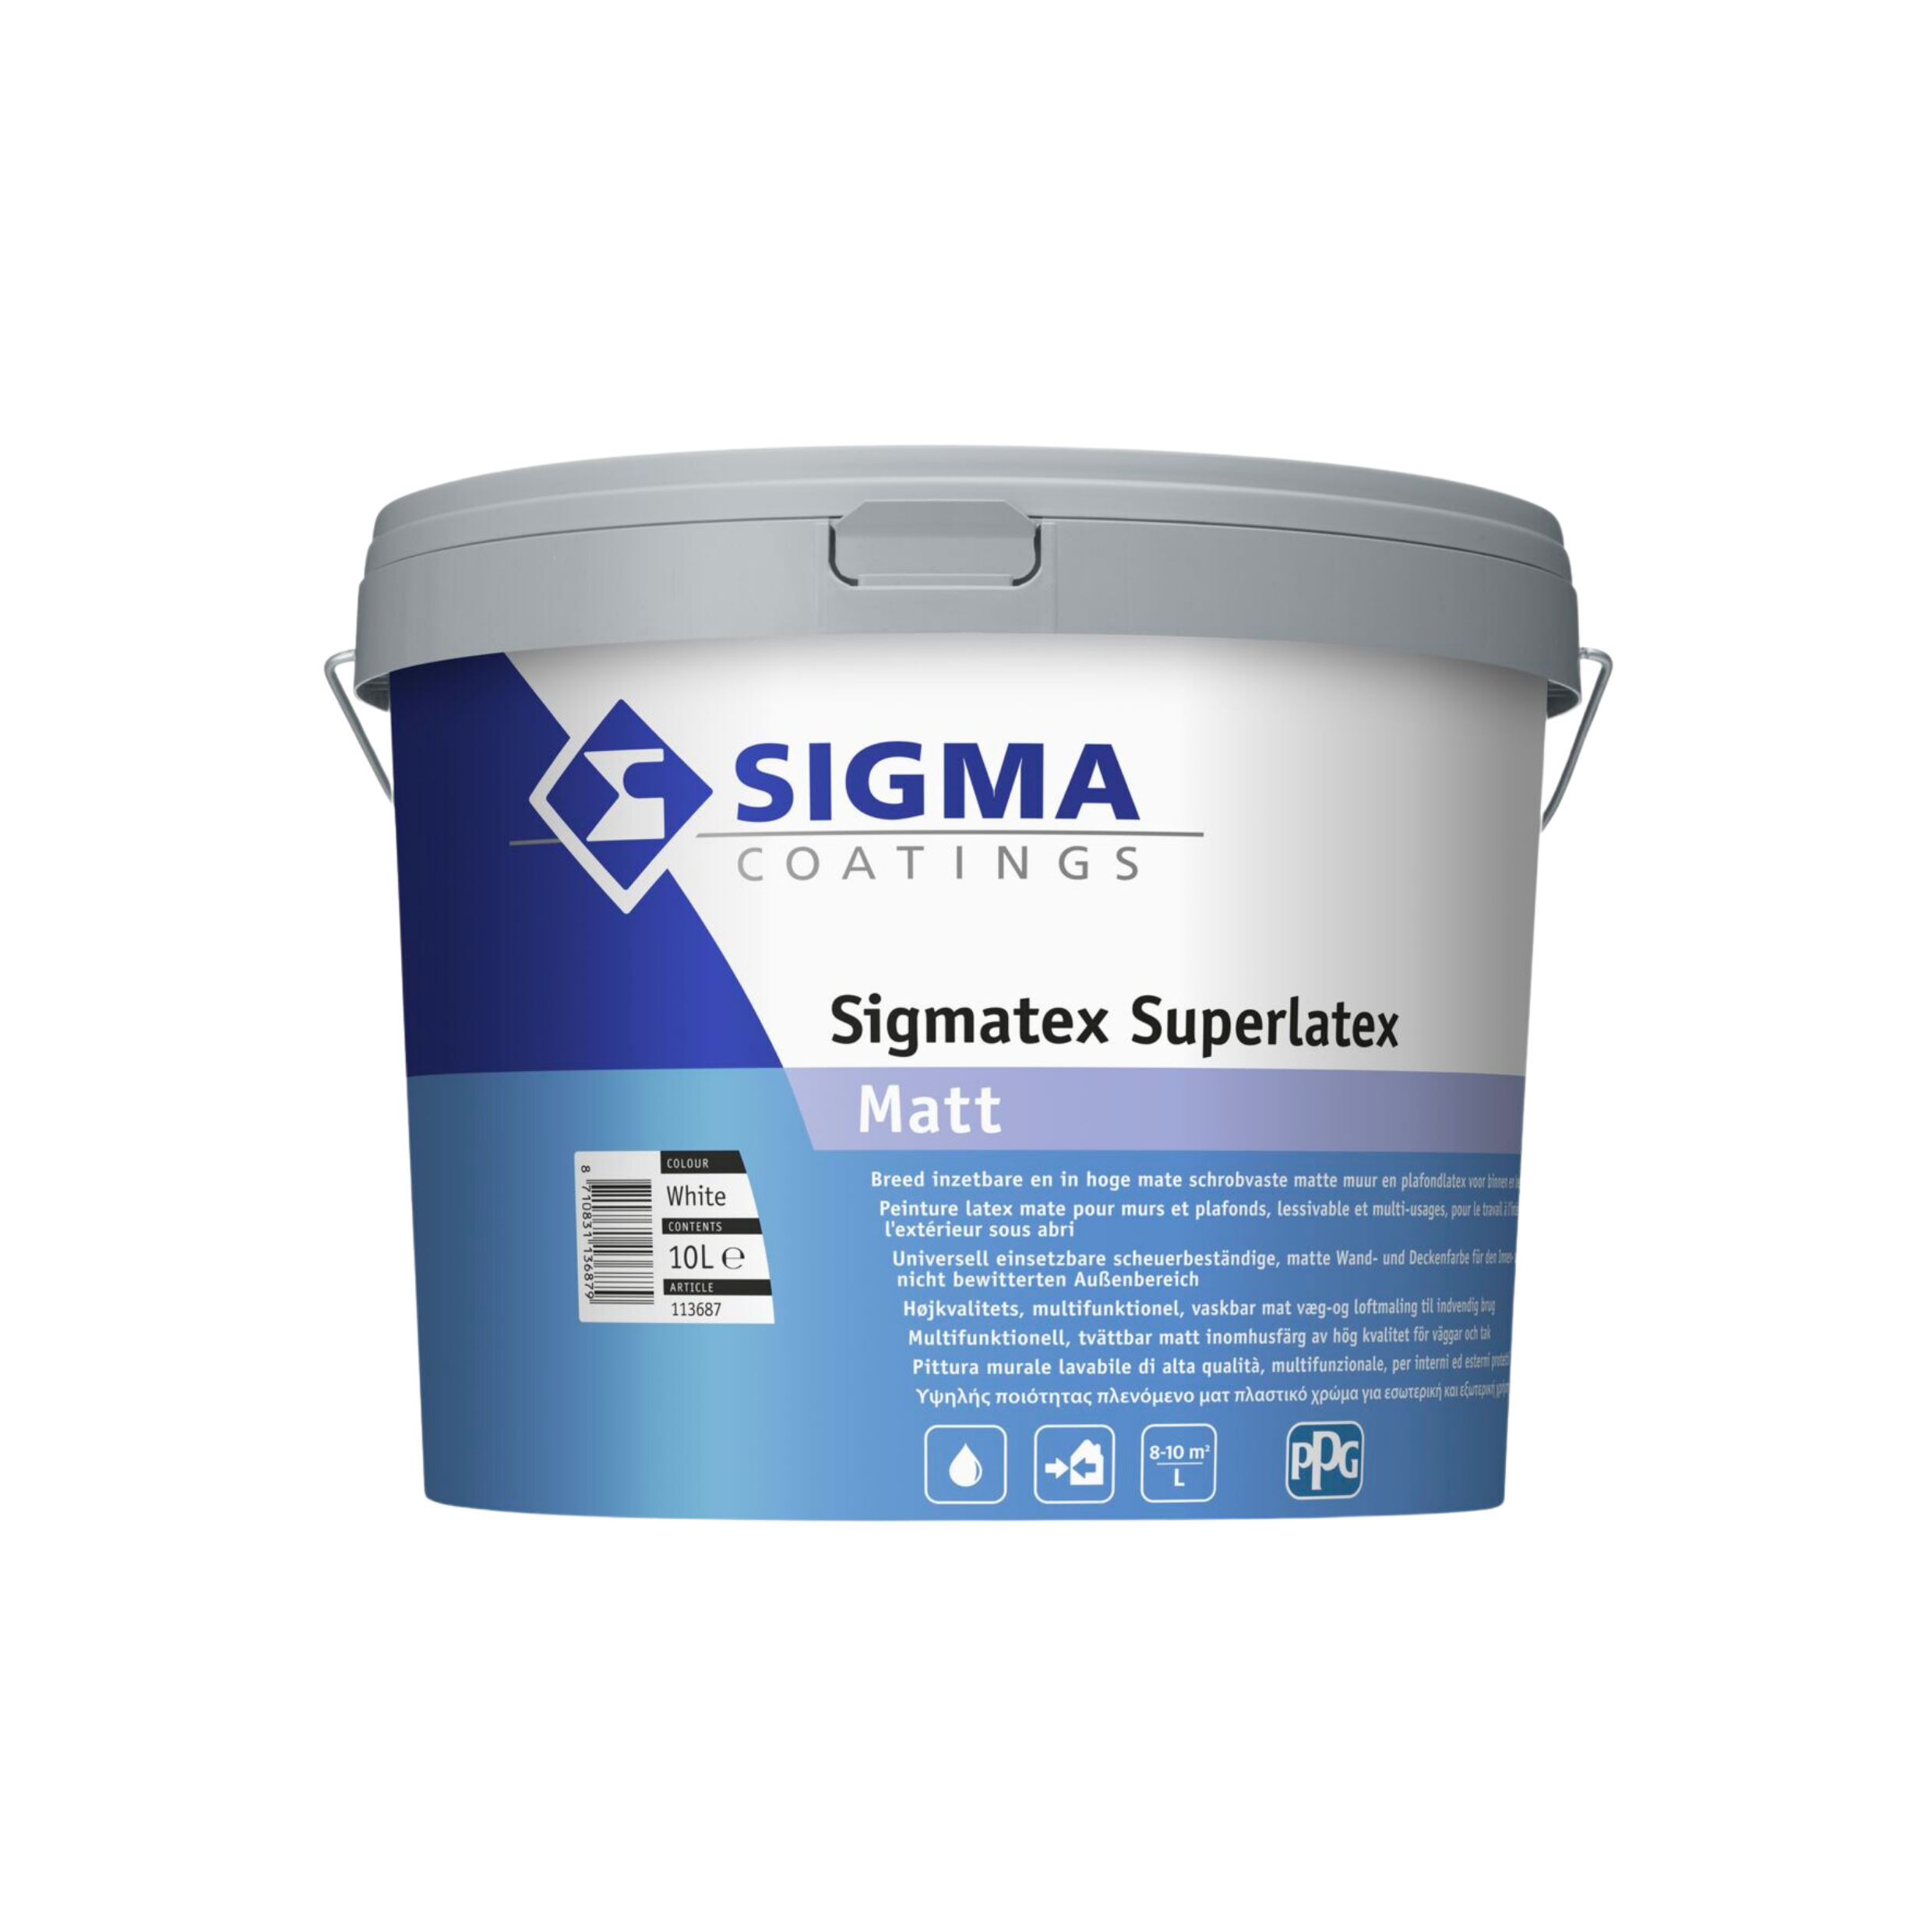 Sigmatex Superlatex-image